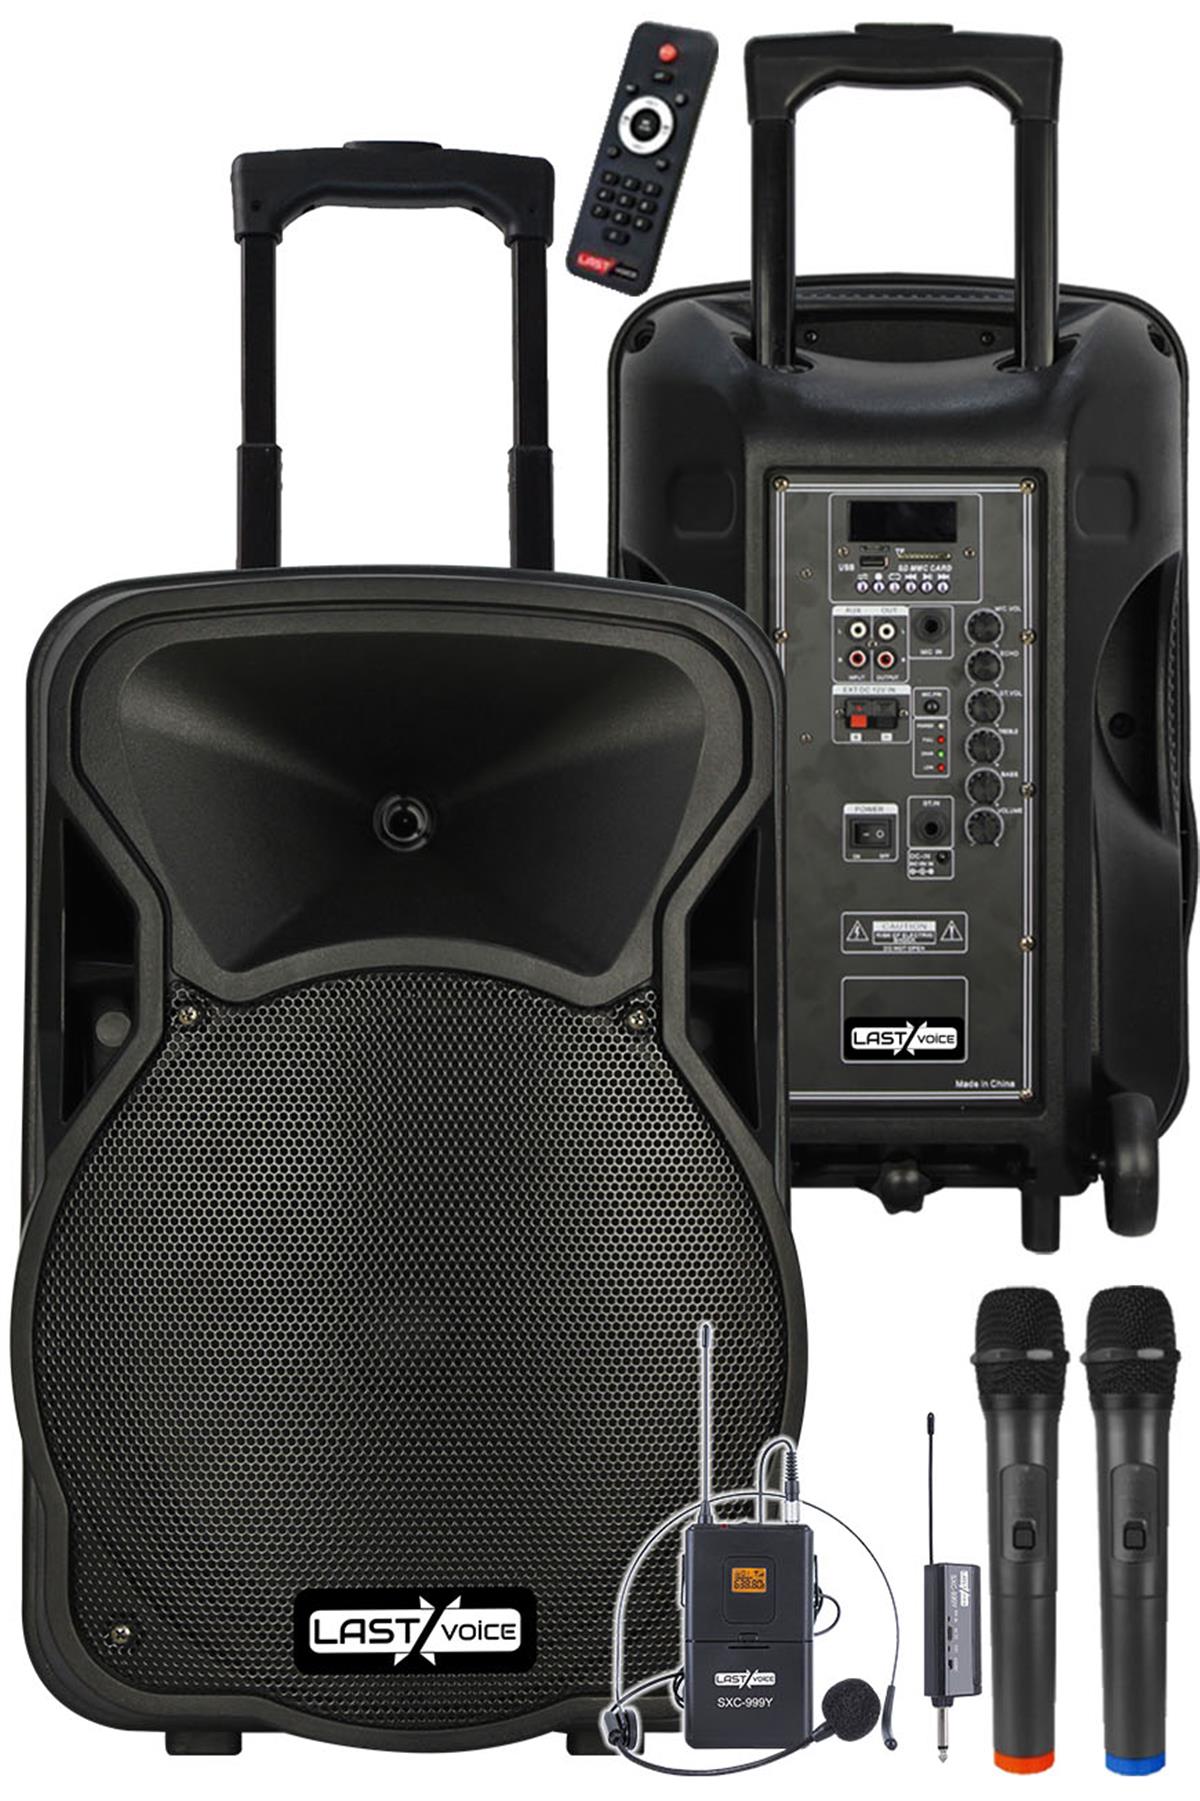 Lastvoice Ls-1912EX Taşınabilir Ses Sistemi Mikrofonlu Hoparlör